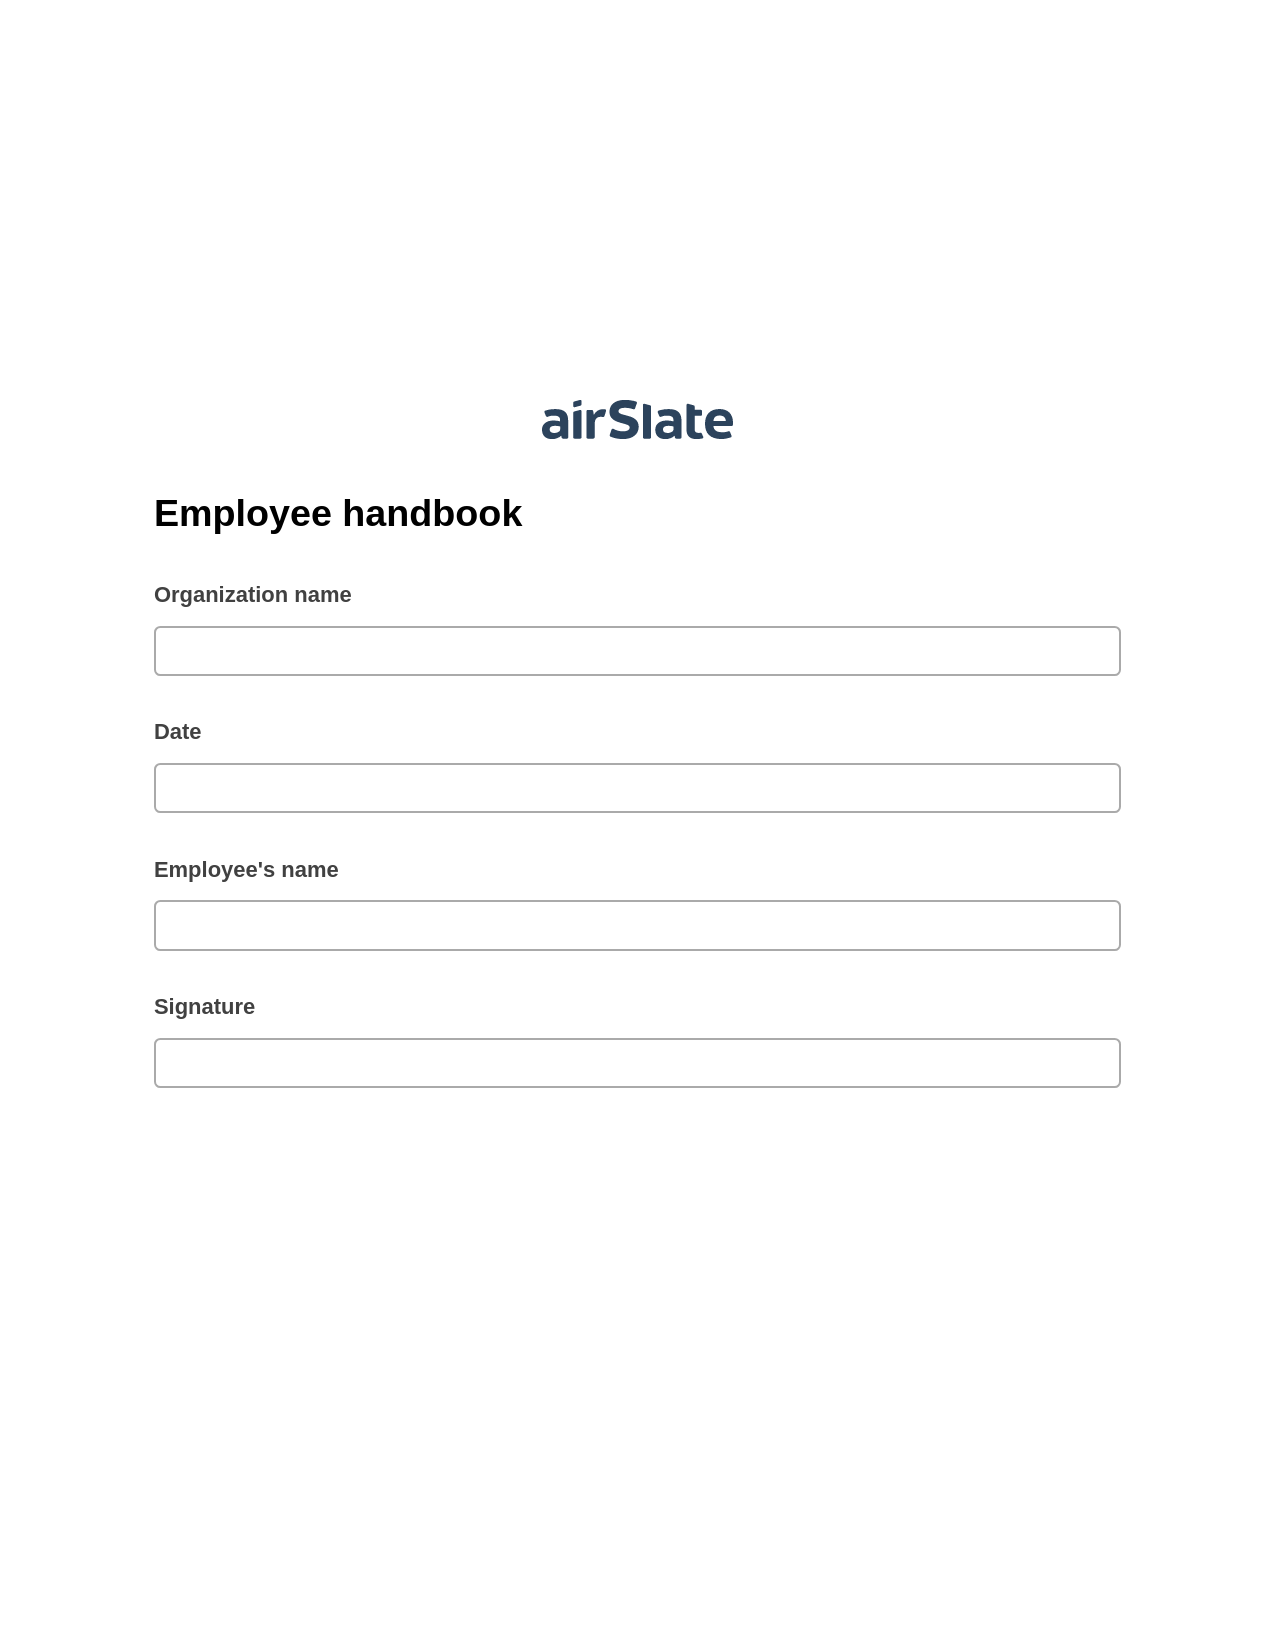 Multirole Employee handbook Pre-fill from Salesforce Record Bot, Send Mailchimp Campaign Bot, Google Drive Bot